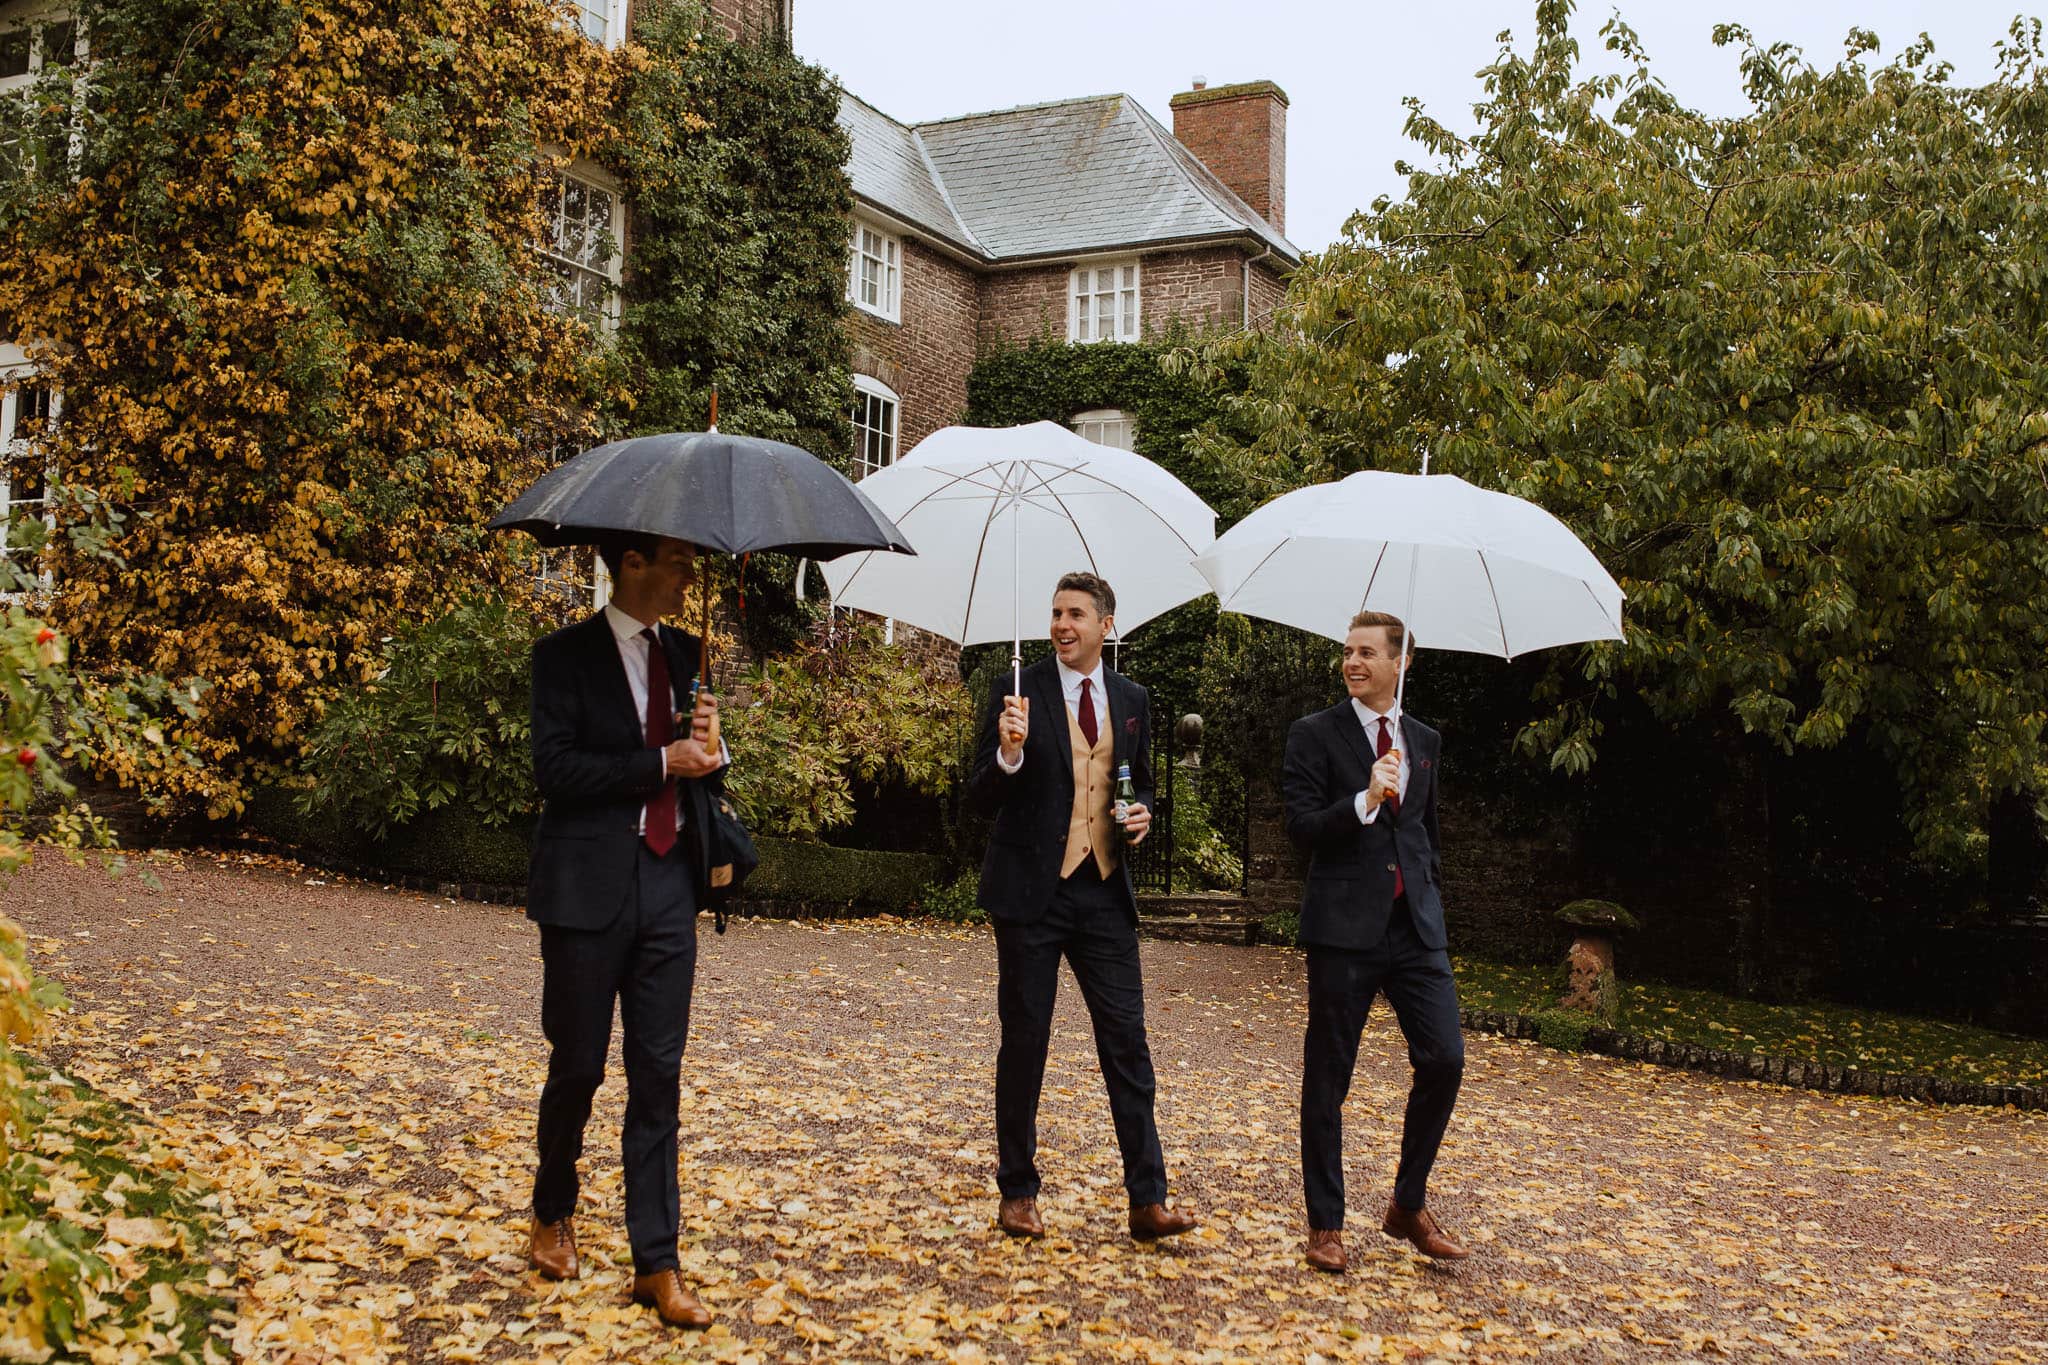 Dewsall Court Herefordshire wedding groomsmen with umbrellas